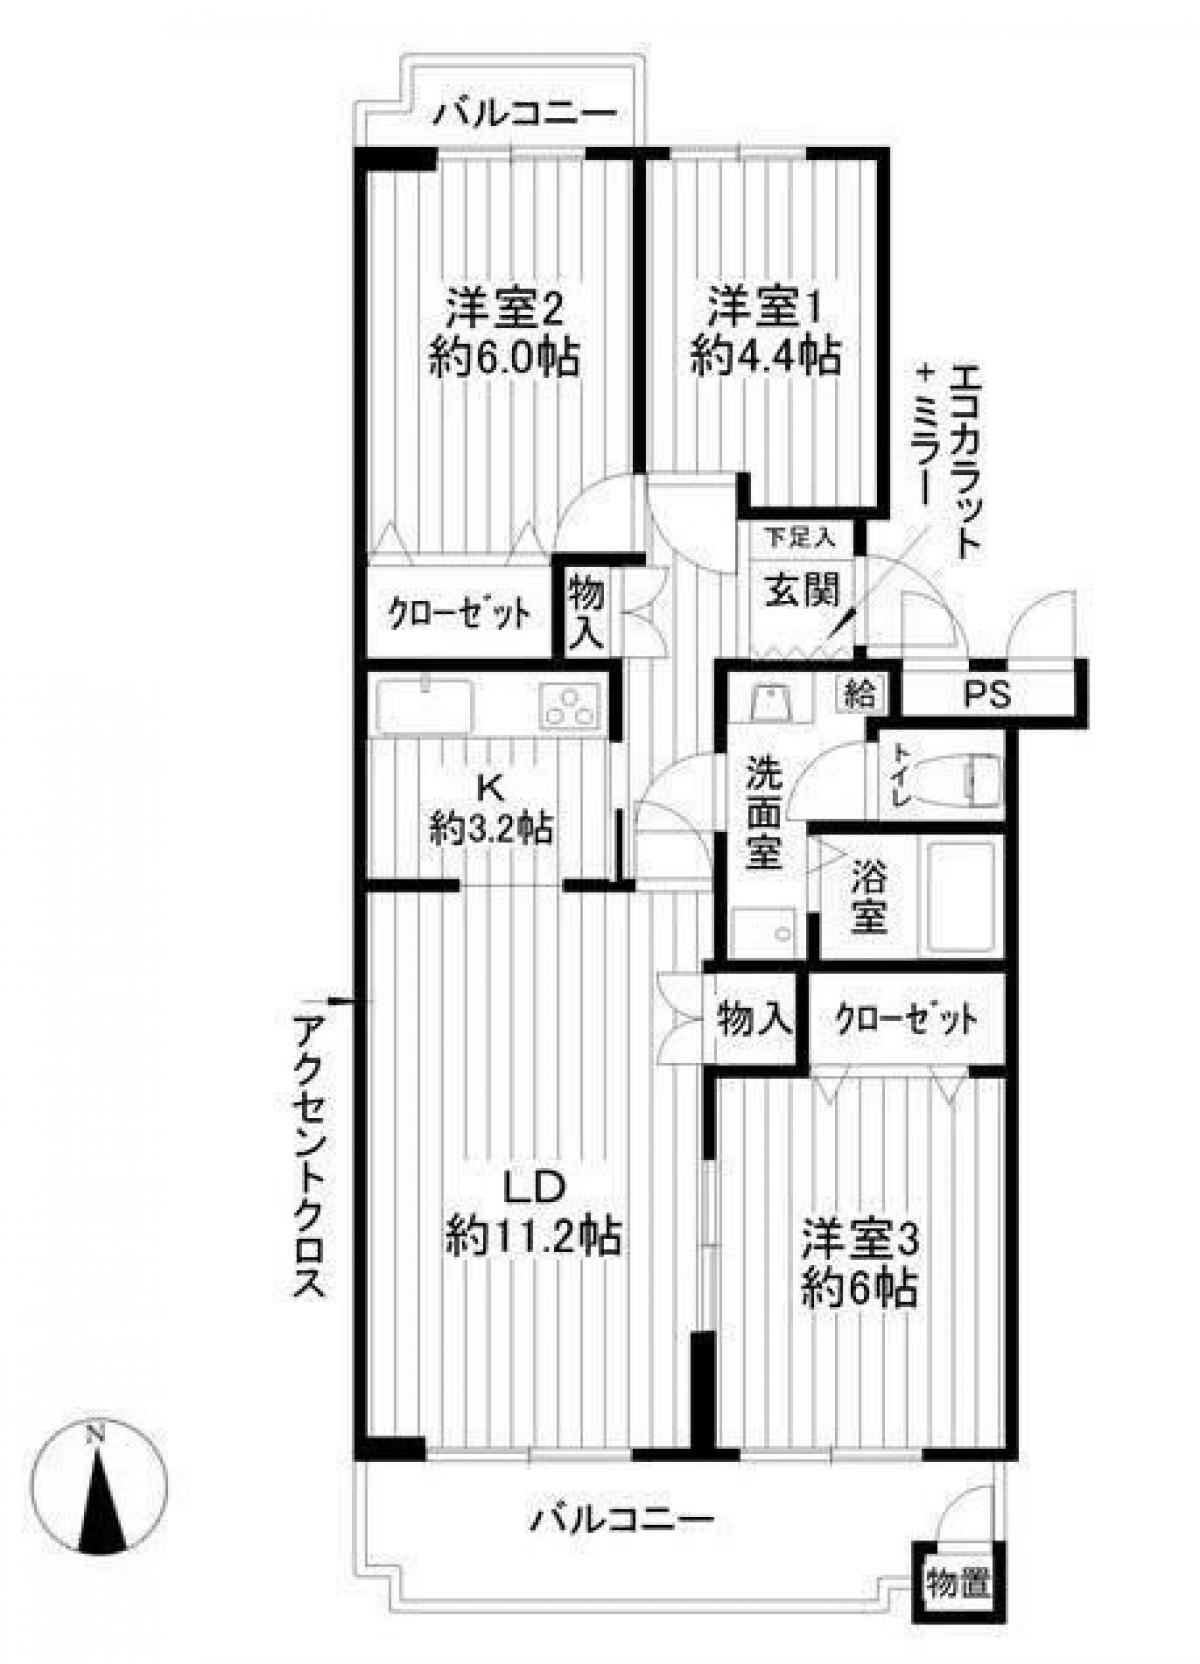 Picture of Apartment For Sale in Chiba Shi Hanamigawa Ku, Chiba, Japan